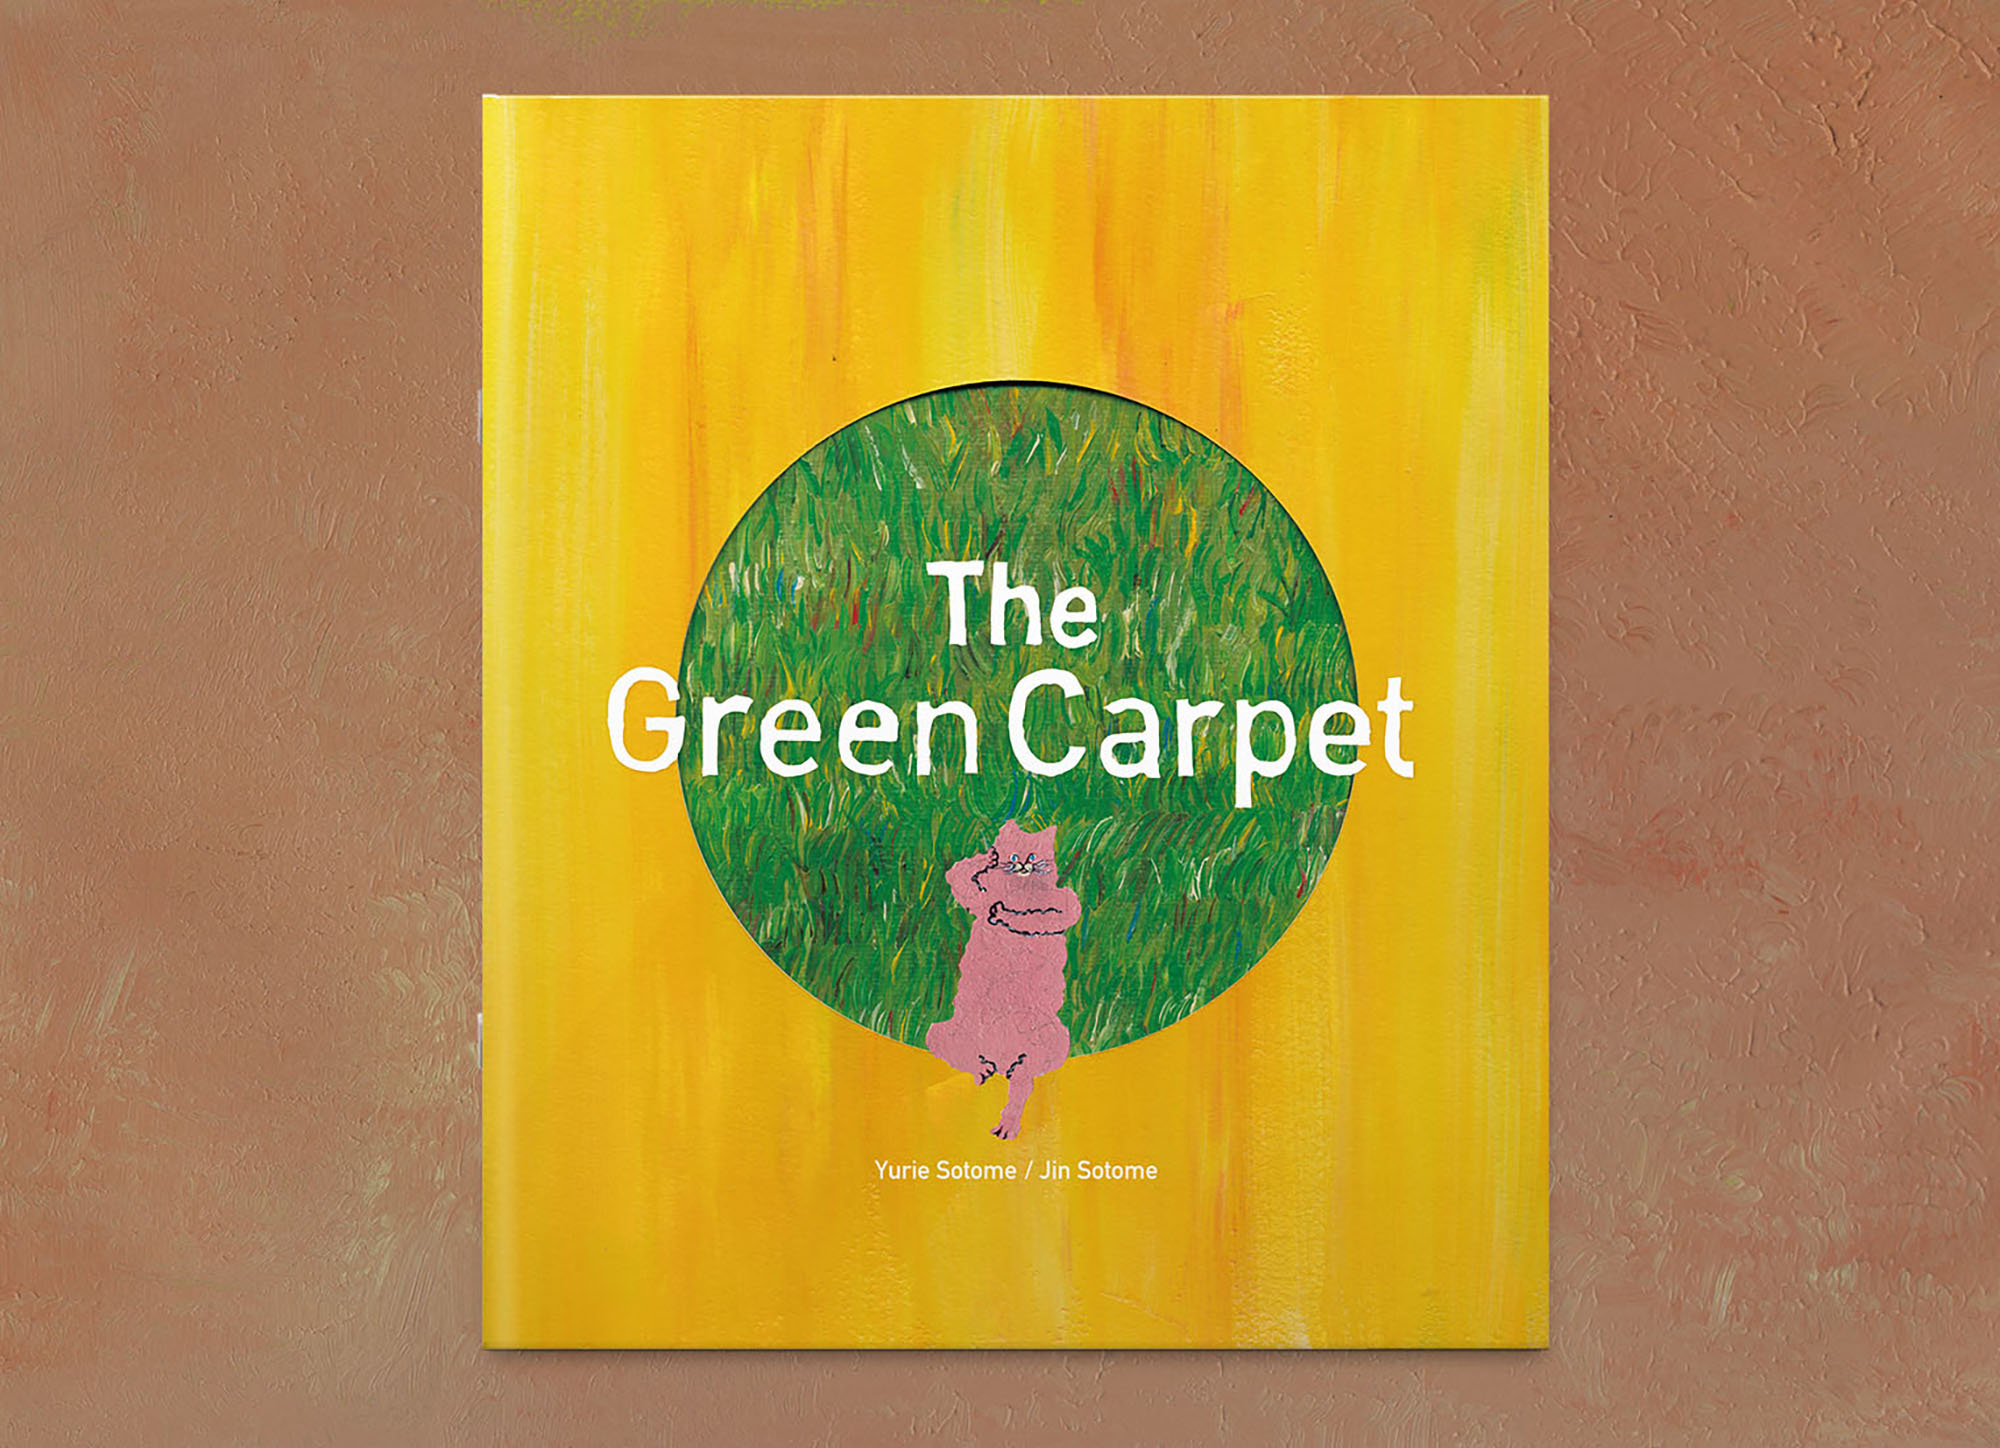 The Green Carpet